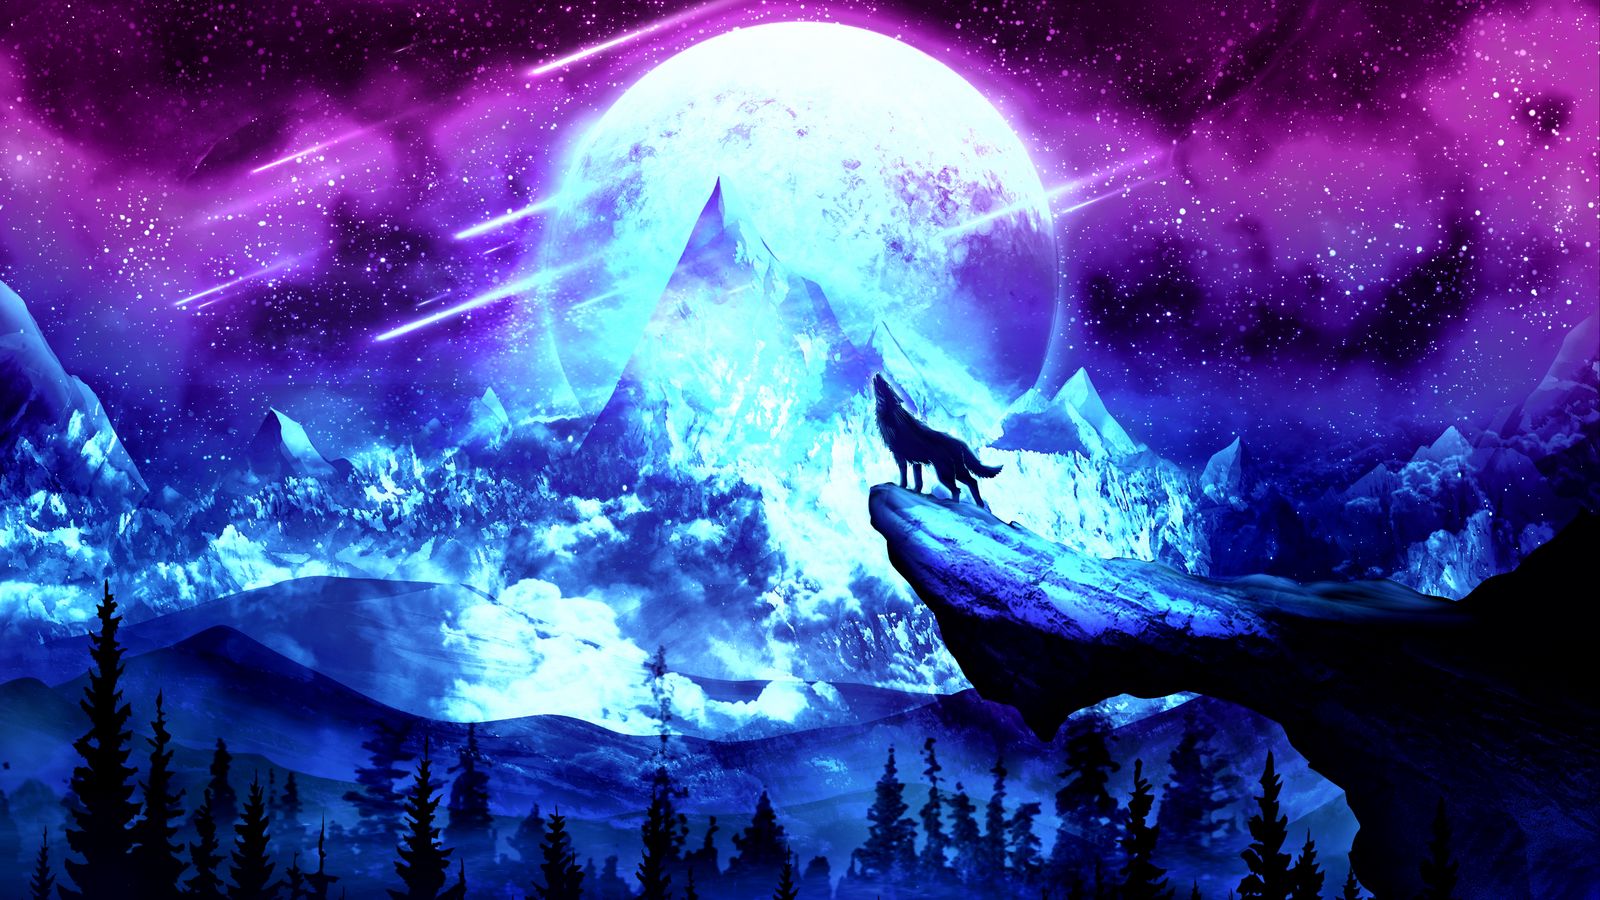 Download wallpaper 1600x900 wolf moon night mountains art